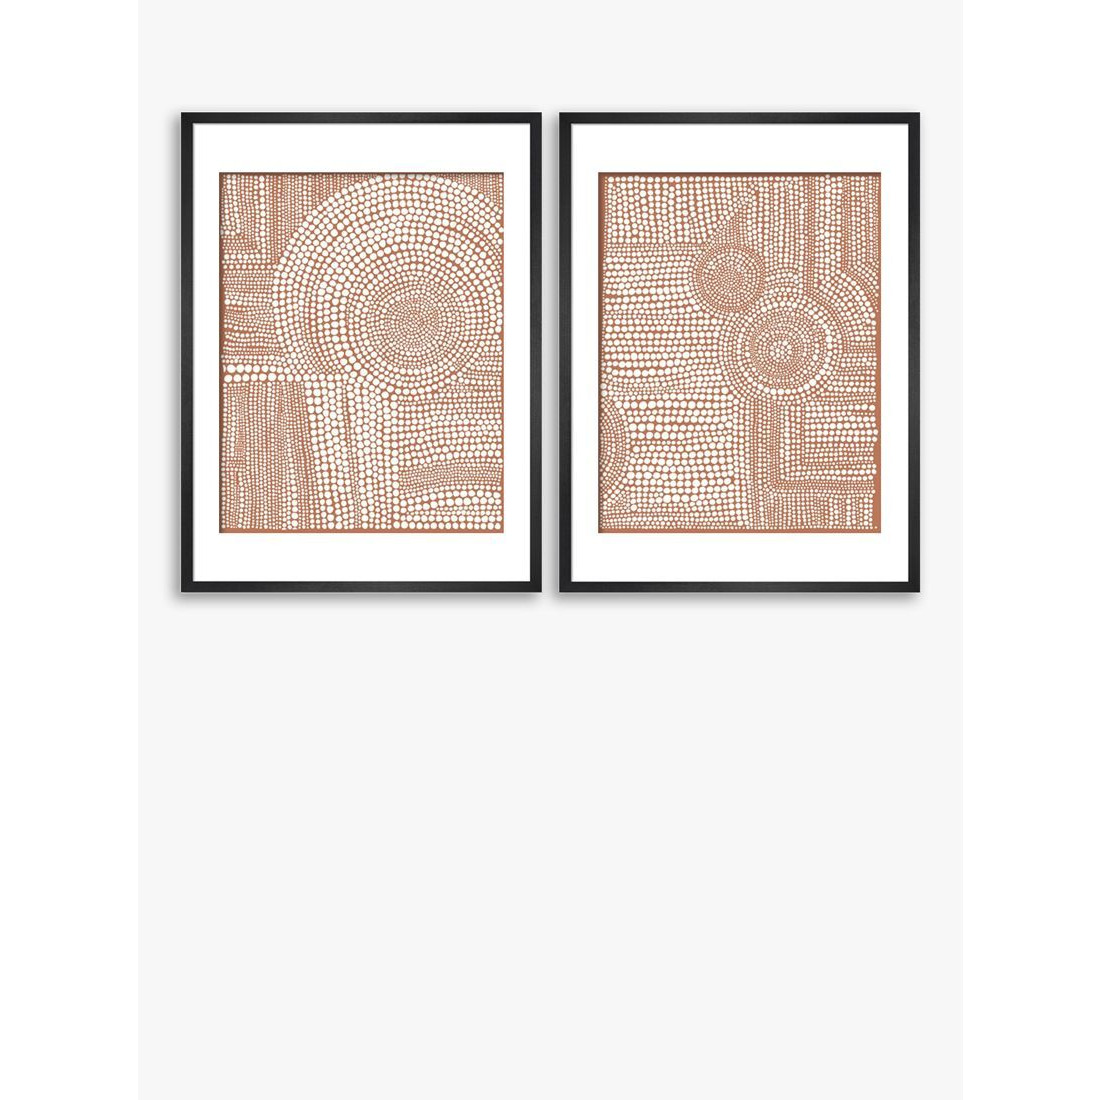 John Lewis Natasha Marie 'Clustered Dots' Abstract Framed Print, Set of 2, 50 x 40cm - image 1